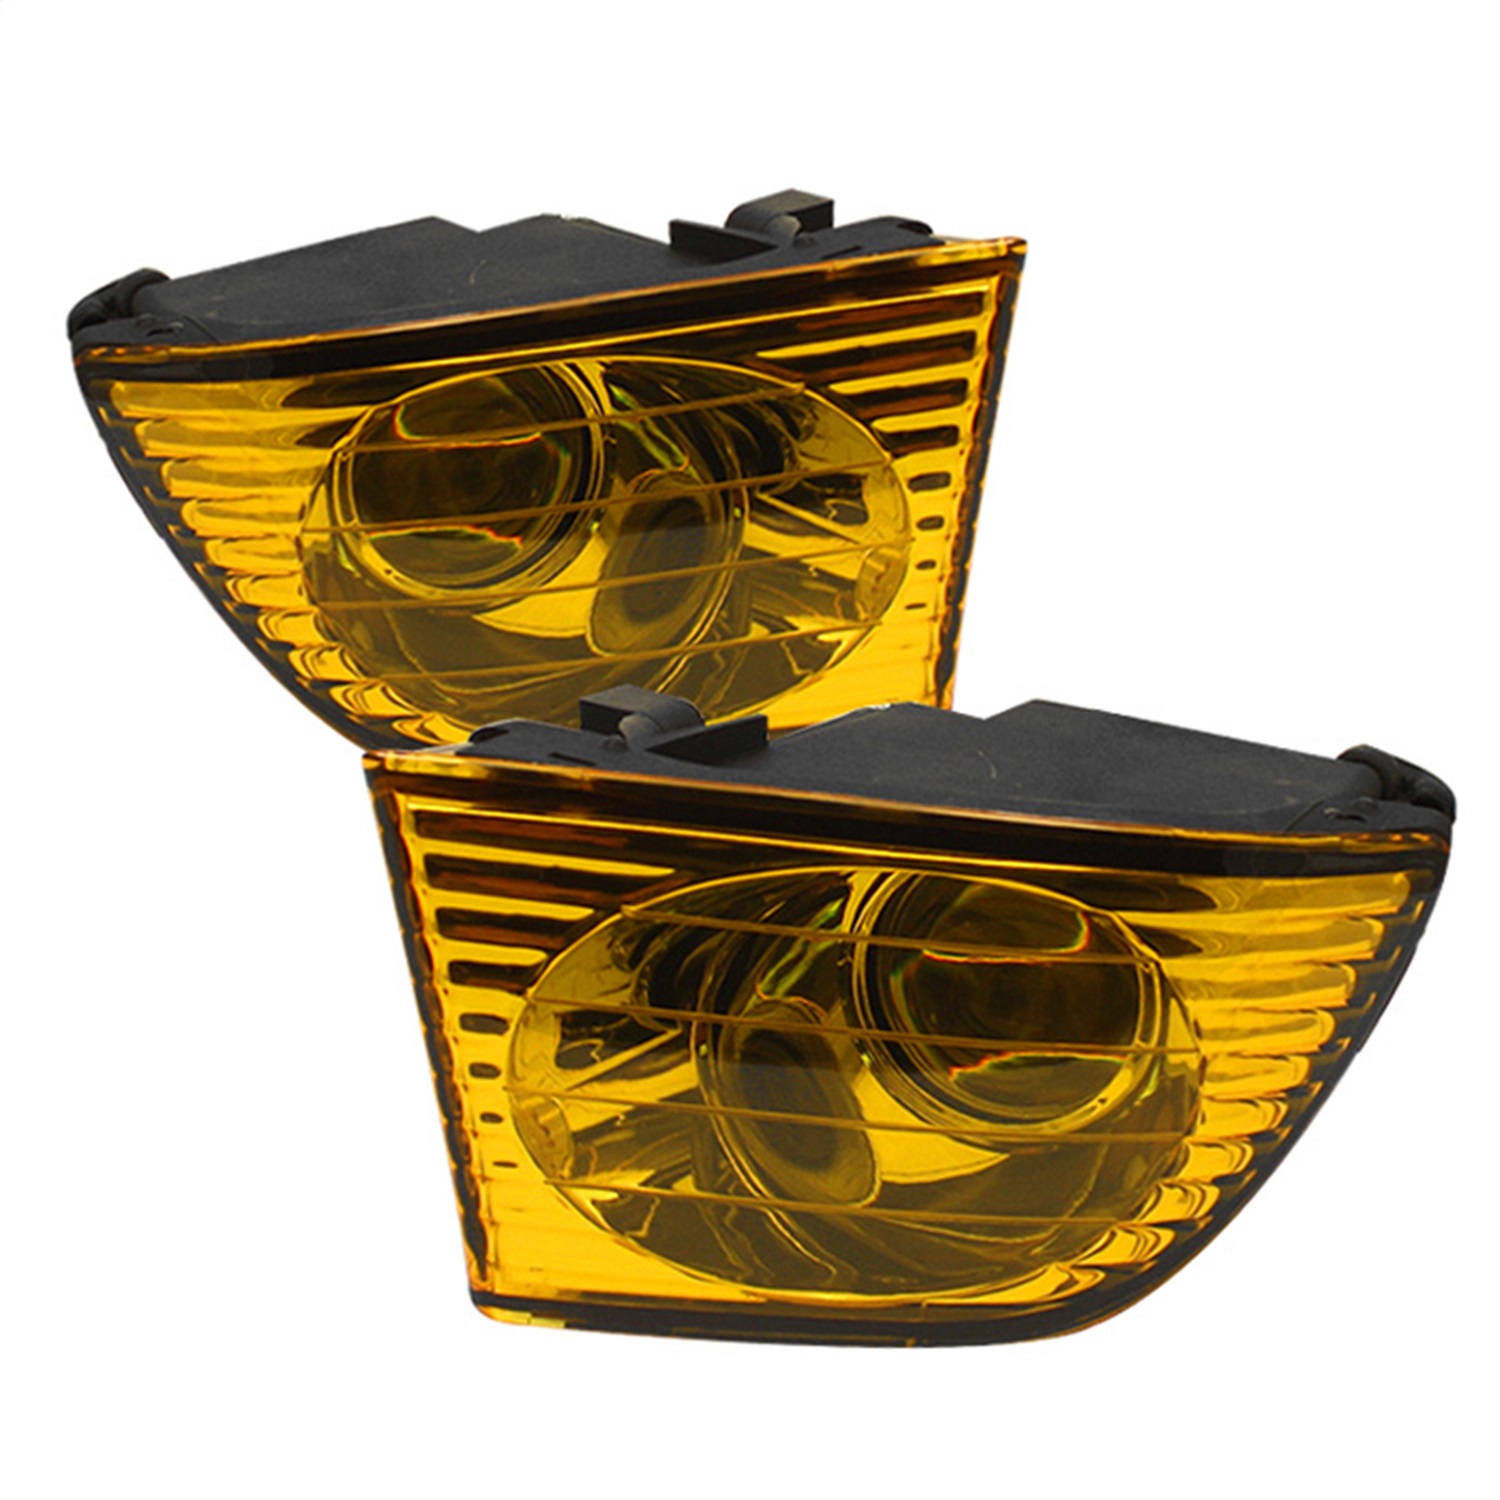 Spyder Auto 5021076 Fog Lights Fits 01-05 IS300